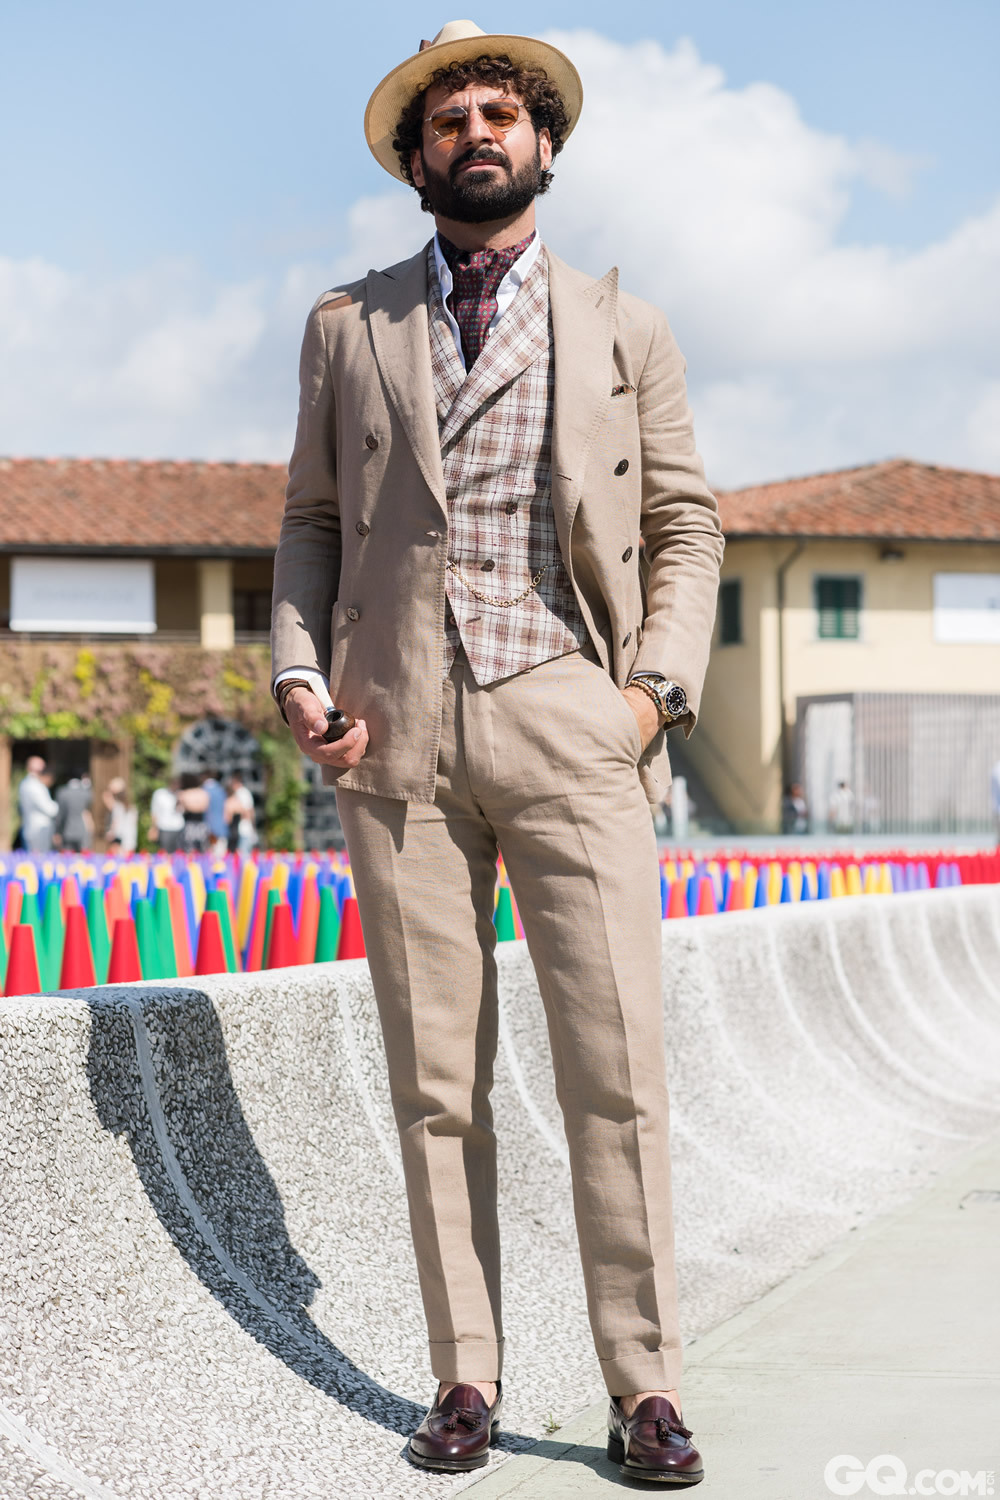 Girogio
Hat: Calepificio Beliese
Sunglasses: Apetizer
Scarf: vintage
Shirt: Fralbo 
Suit: Stile Latino Napoli
Bracelets: Gerba
Shoes: Belasca

Inspiration: The Napolitan dandy
（Napolitan花花公子）